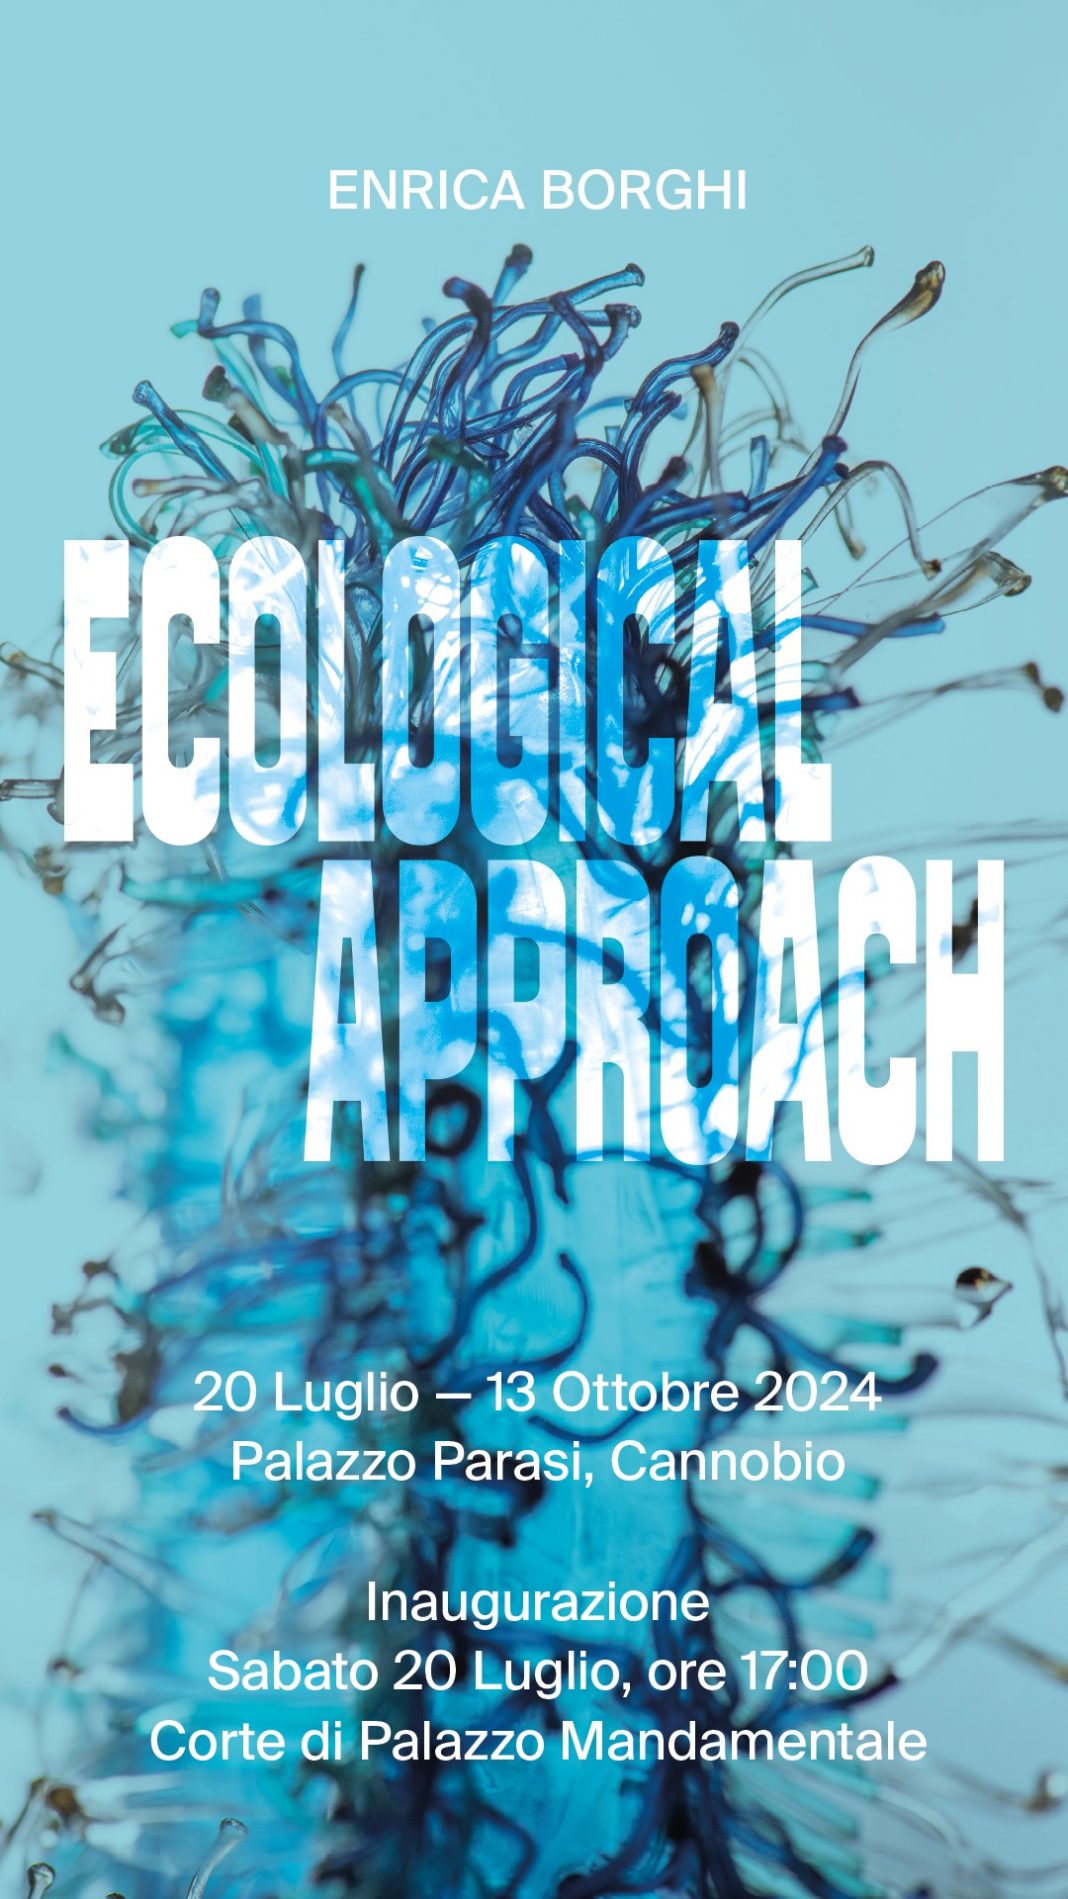 ENRICA BORGHI – ECOLOGICAL APPROACHhttps://www.exibart.com/repository/media/formidable/11/img/47e/Enrica-Borghi-Palazzo-Parasi-Invito-1068x1899.jpg